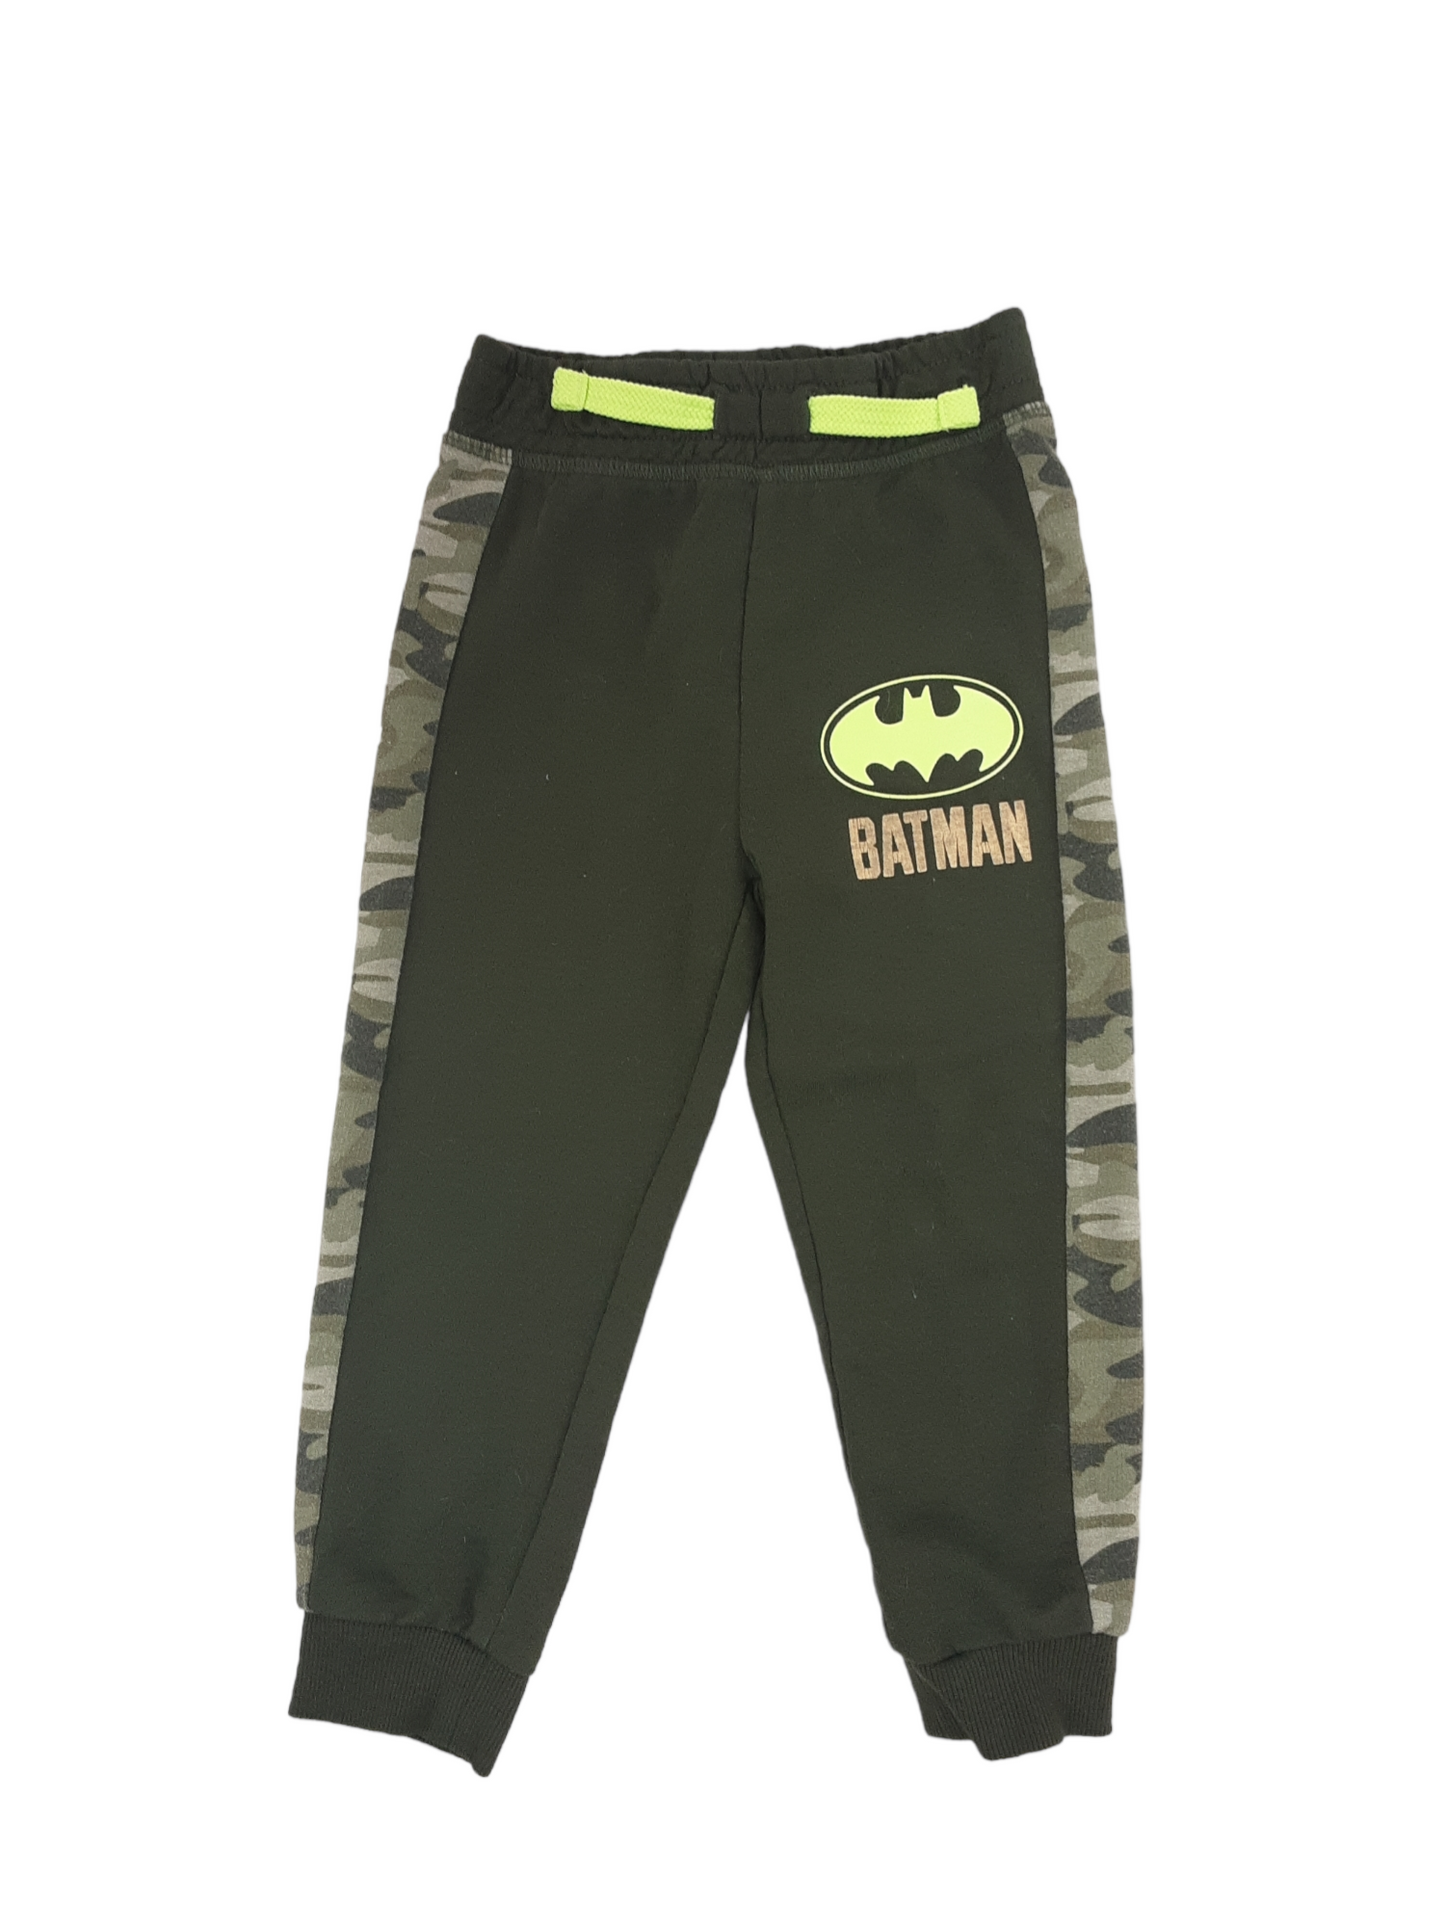 Bat guy joggers size 2t